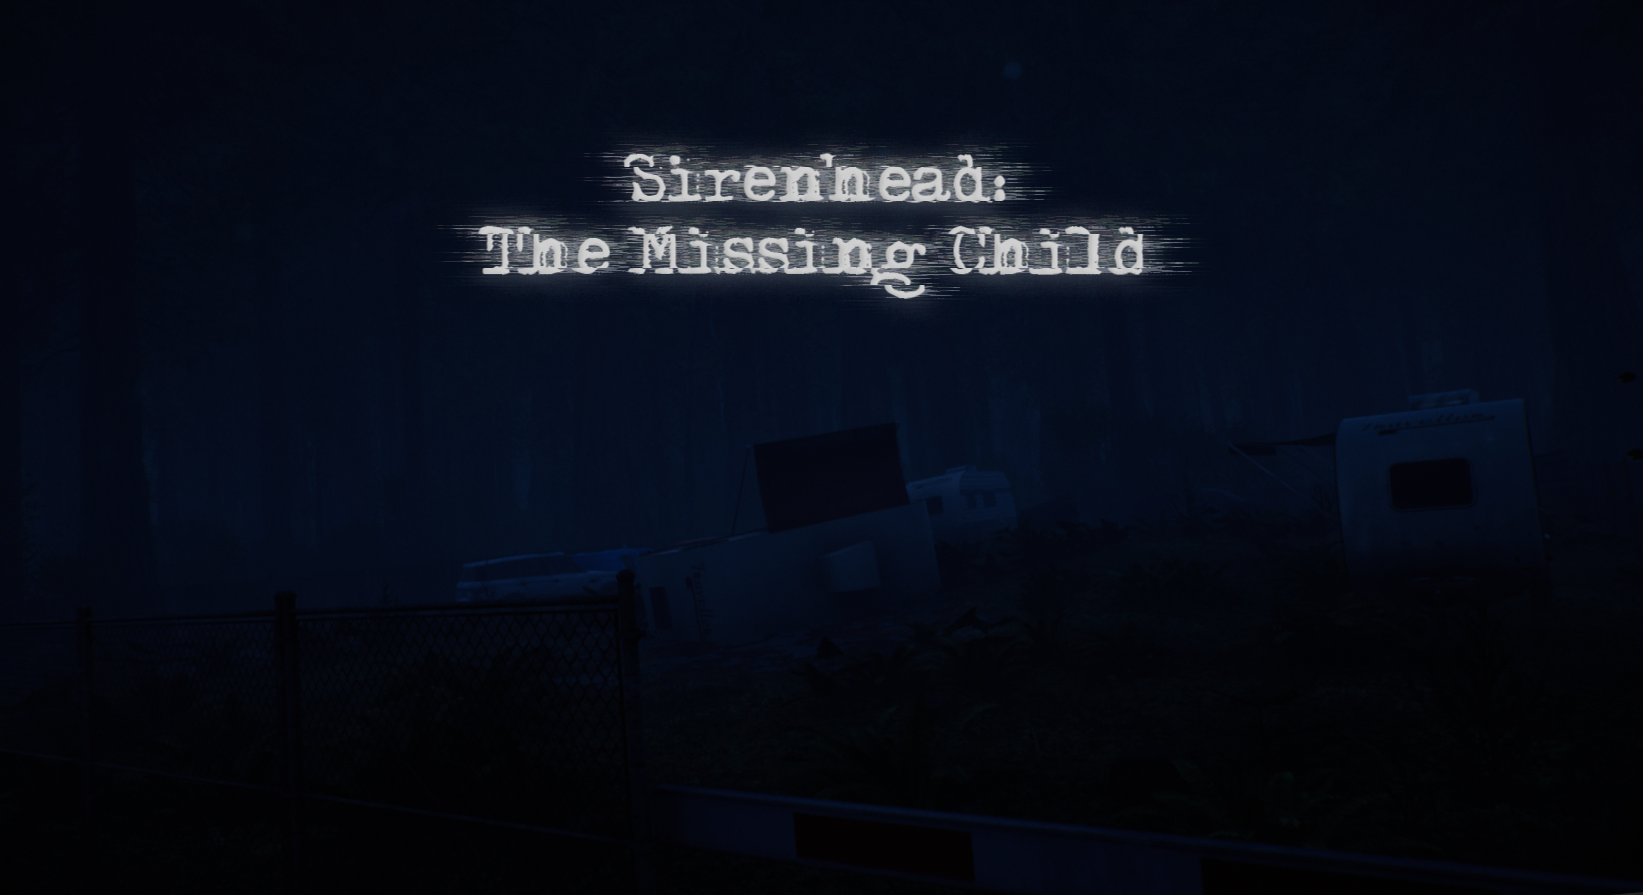 Sirenhead: The Missing Child